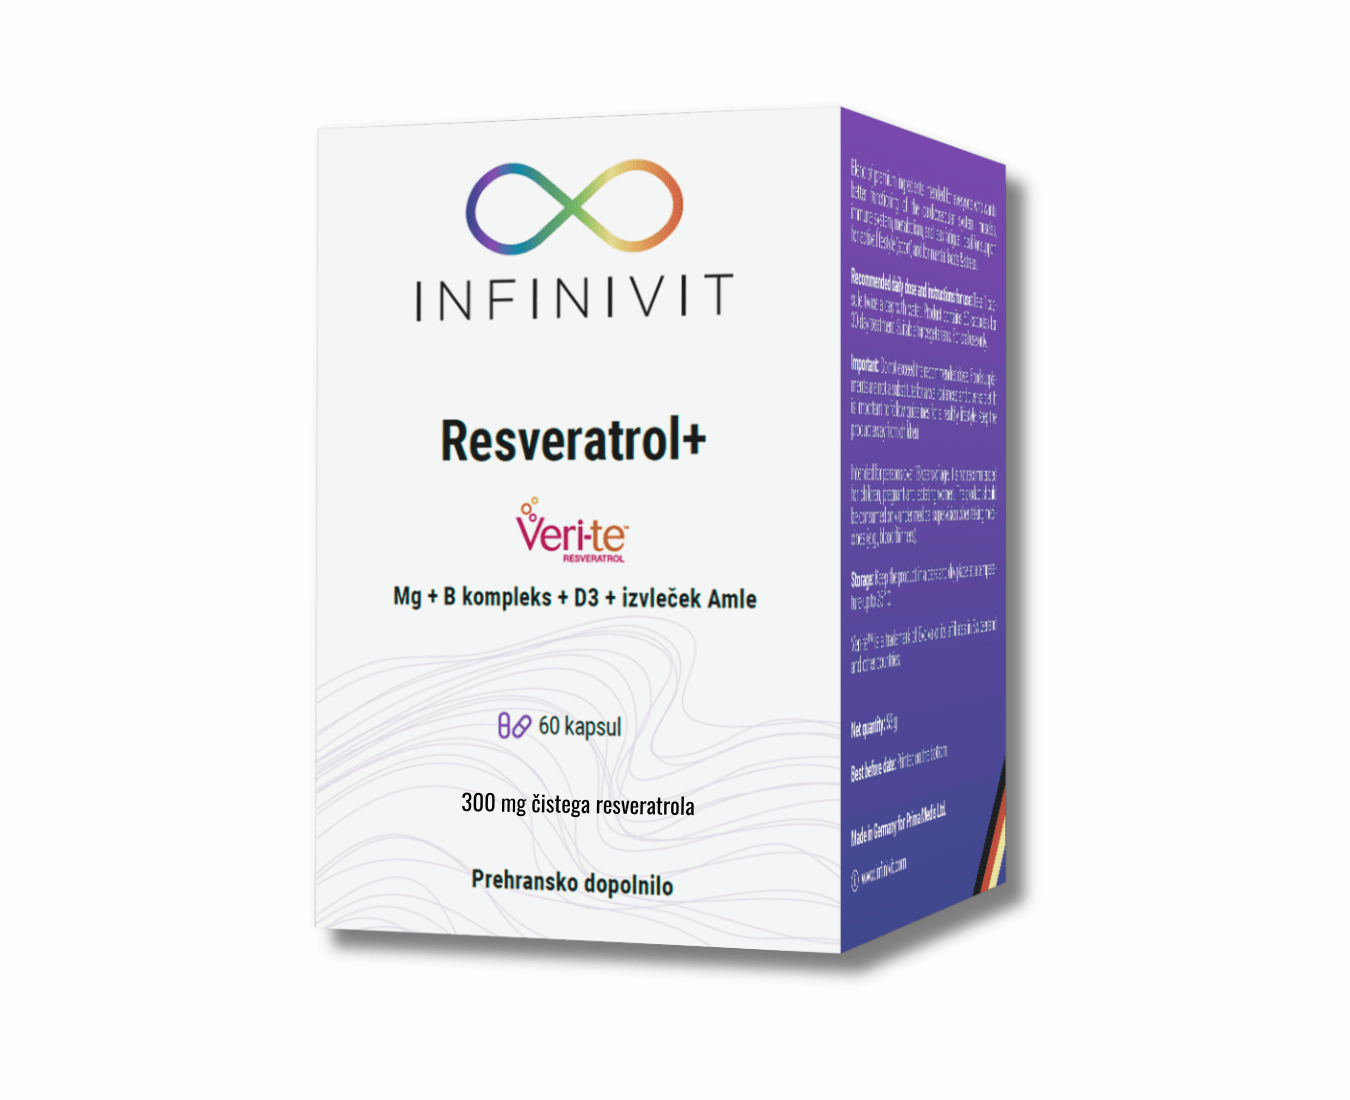 Infinivit Resveratrol+ kapsule, 60 kapsul